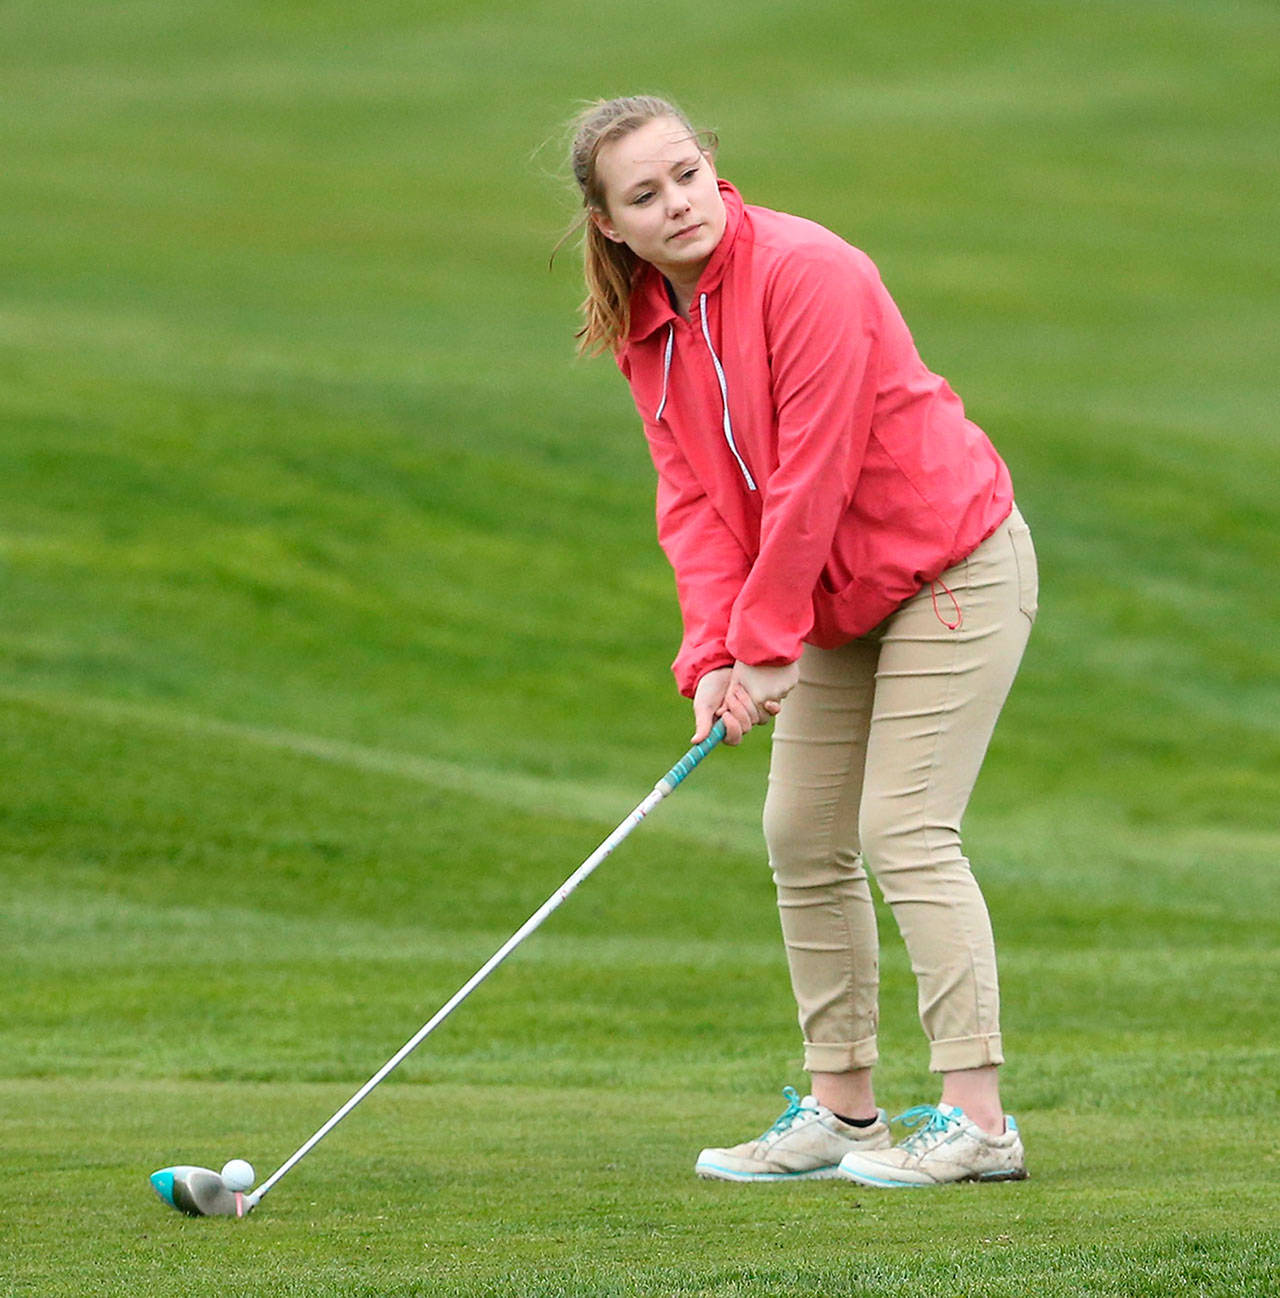 Beth Paul is one of only two returning letter winners for the Oak Harbor girls golf team. (Photo by John Fisken)